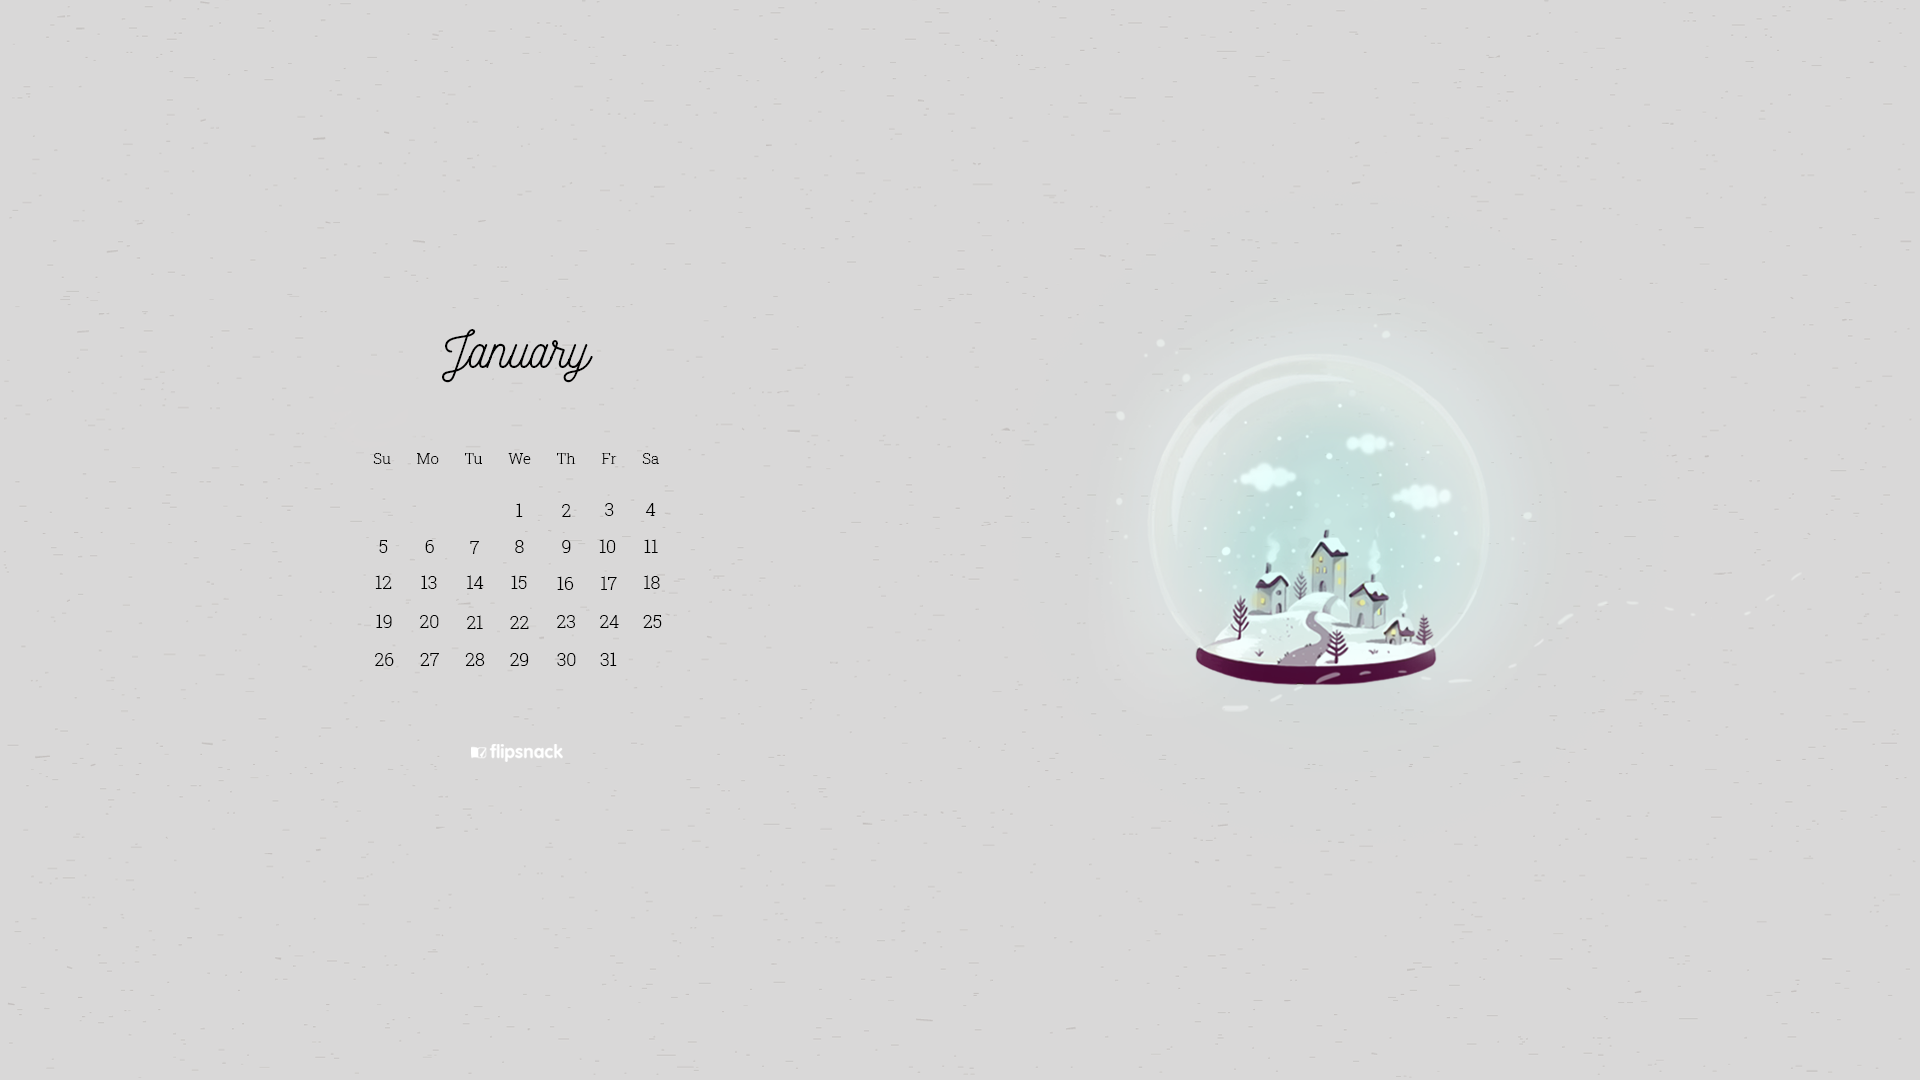 Wallpaper Calendars January December Flipsnack